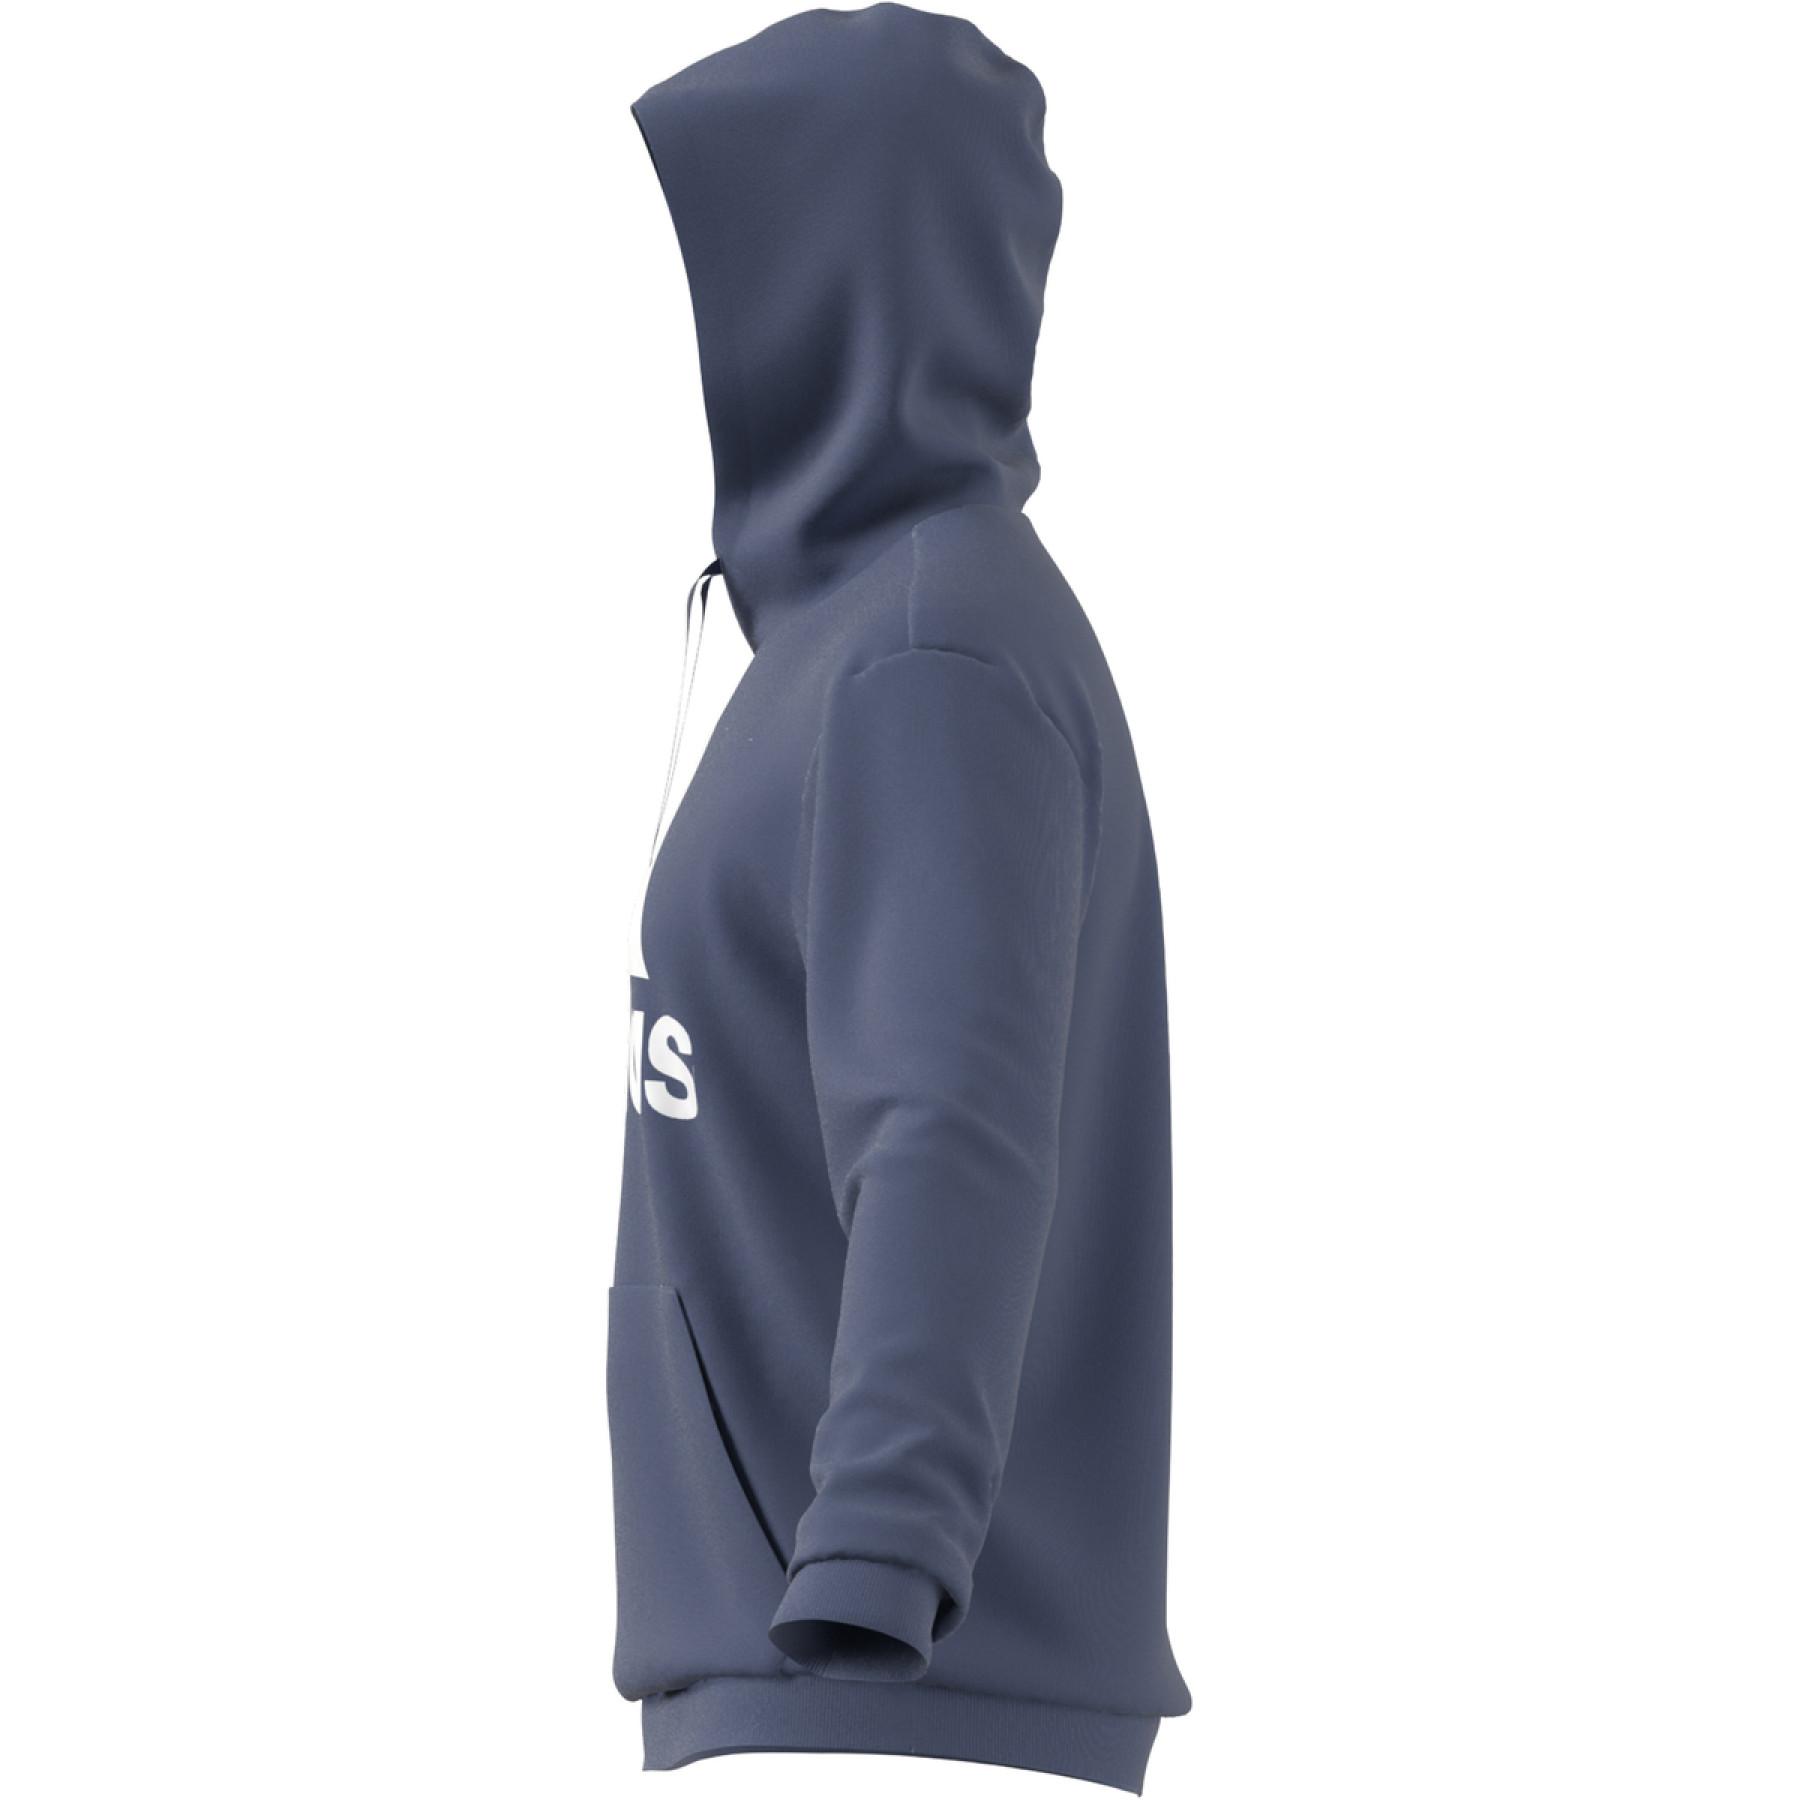 Hooded sweatshirt adidas Essentials Big Logo